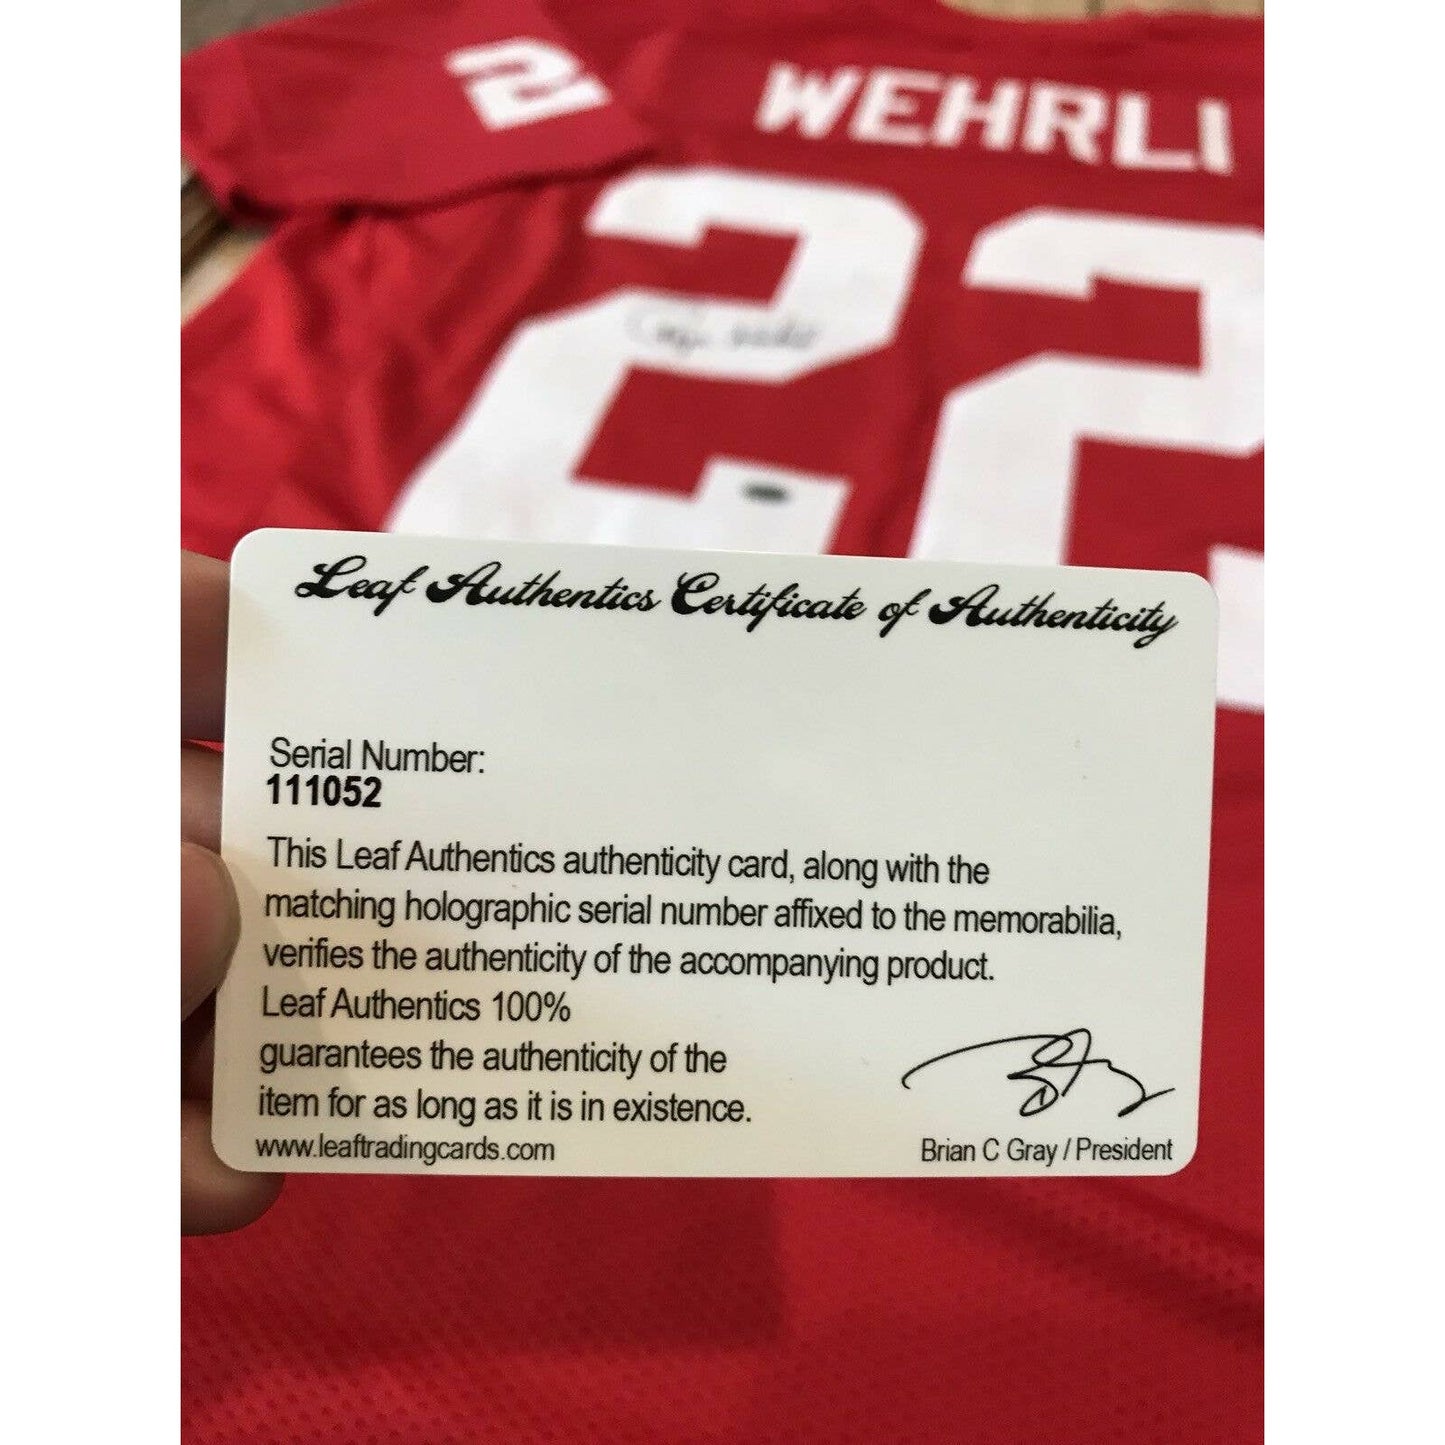 Roger Wehrli Autographed/Signed Jersey LEAF COA Arizona Cardinals Chicago Werhli - TreasuresEvolved